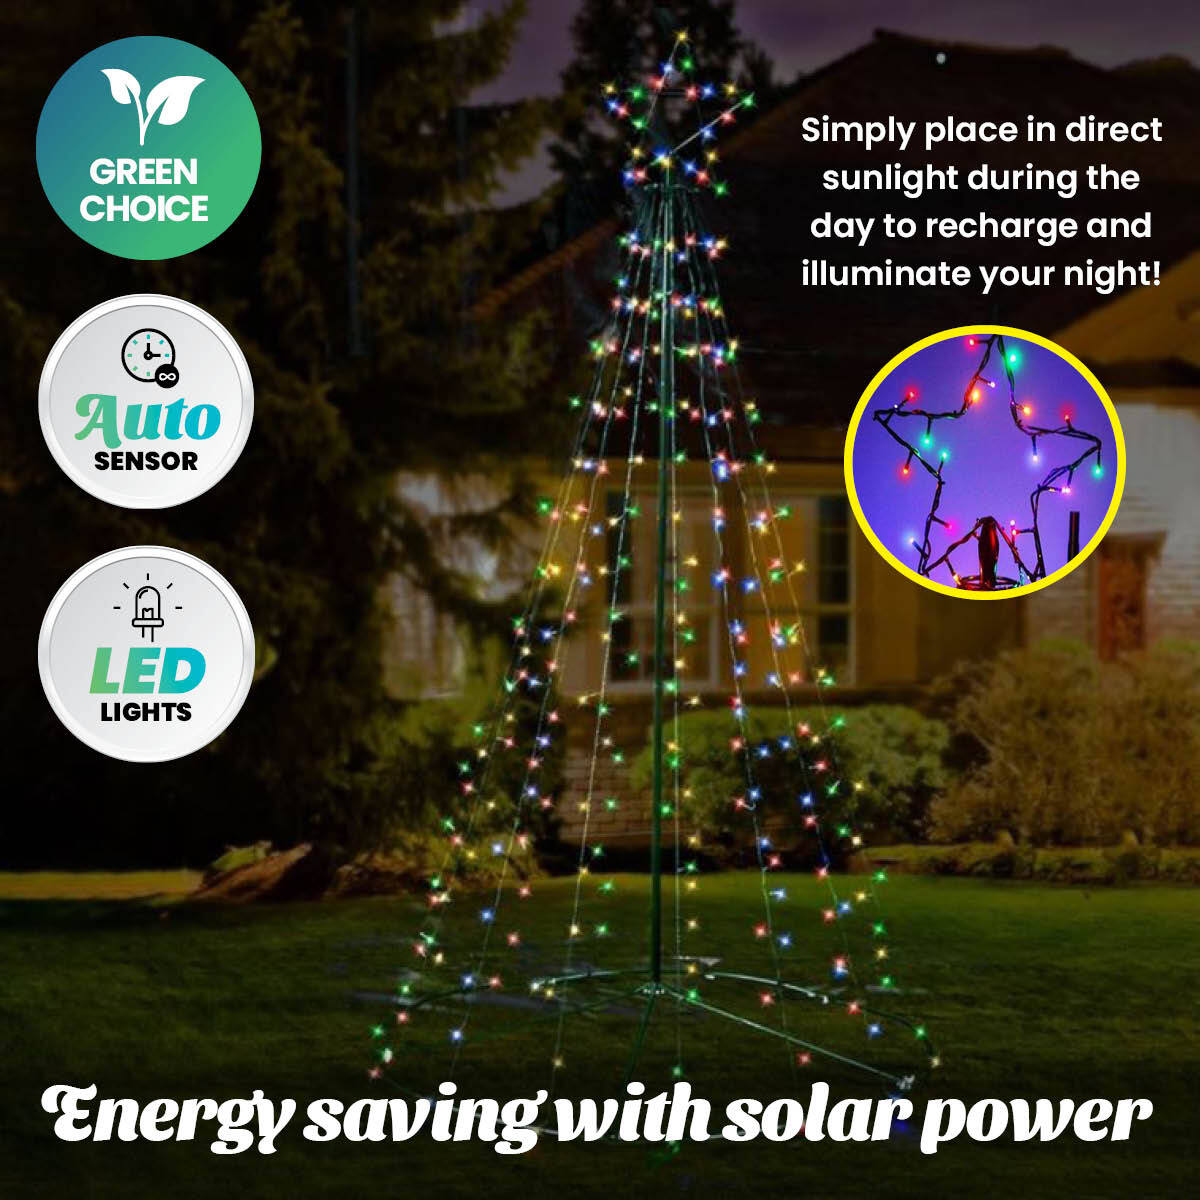 Christmas By Sas 3m Tree Shaped LED Multicoloured Solar Lights & Metal Frame Occasions > Christmas   